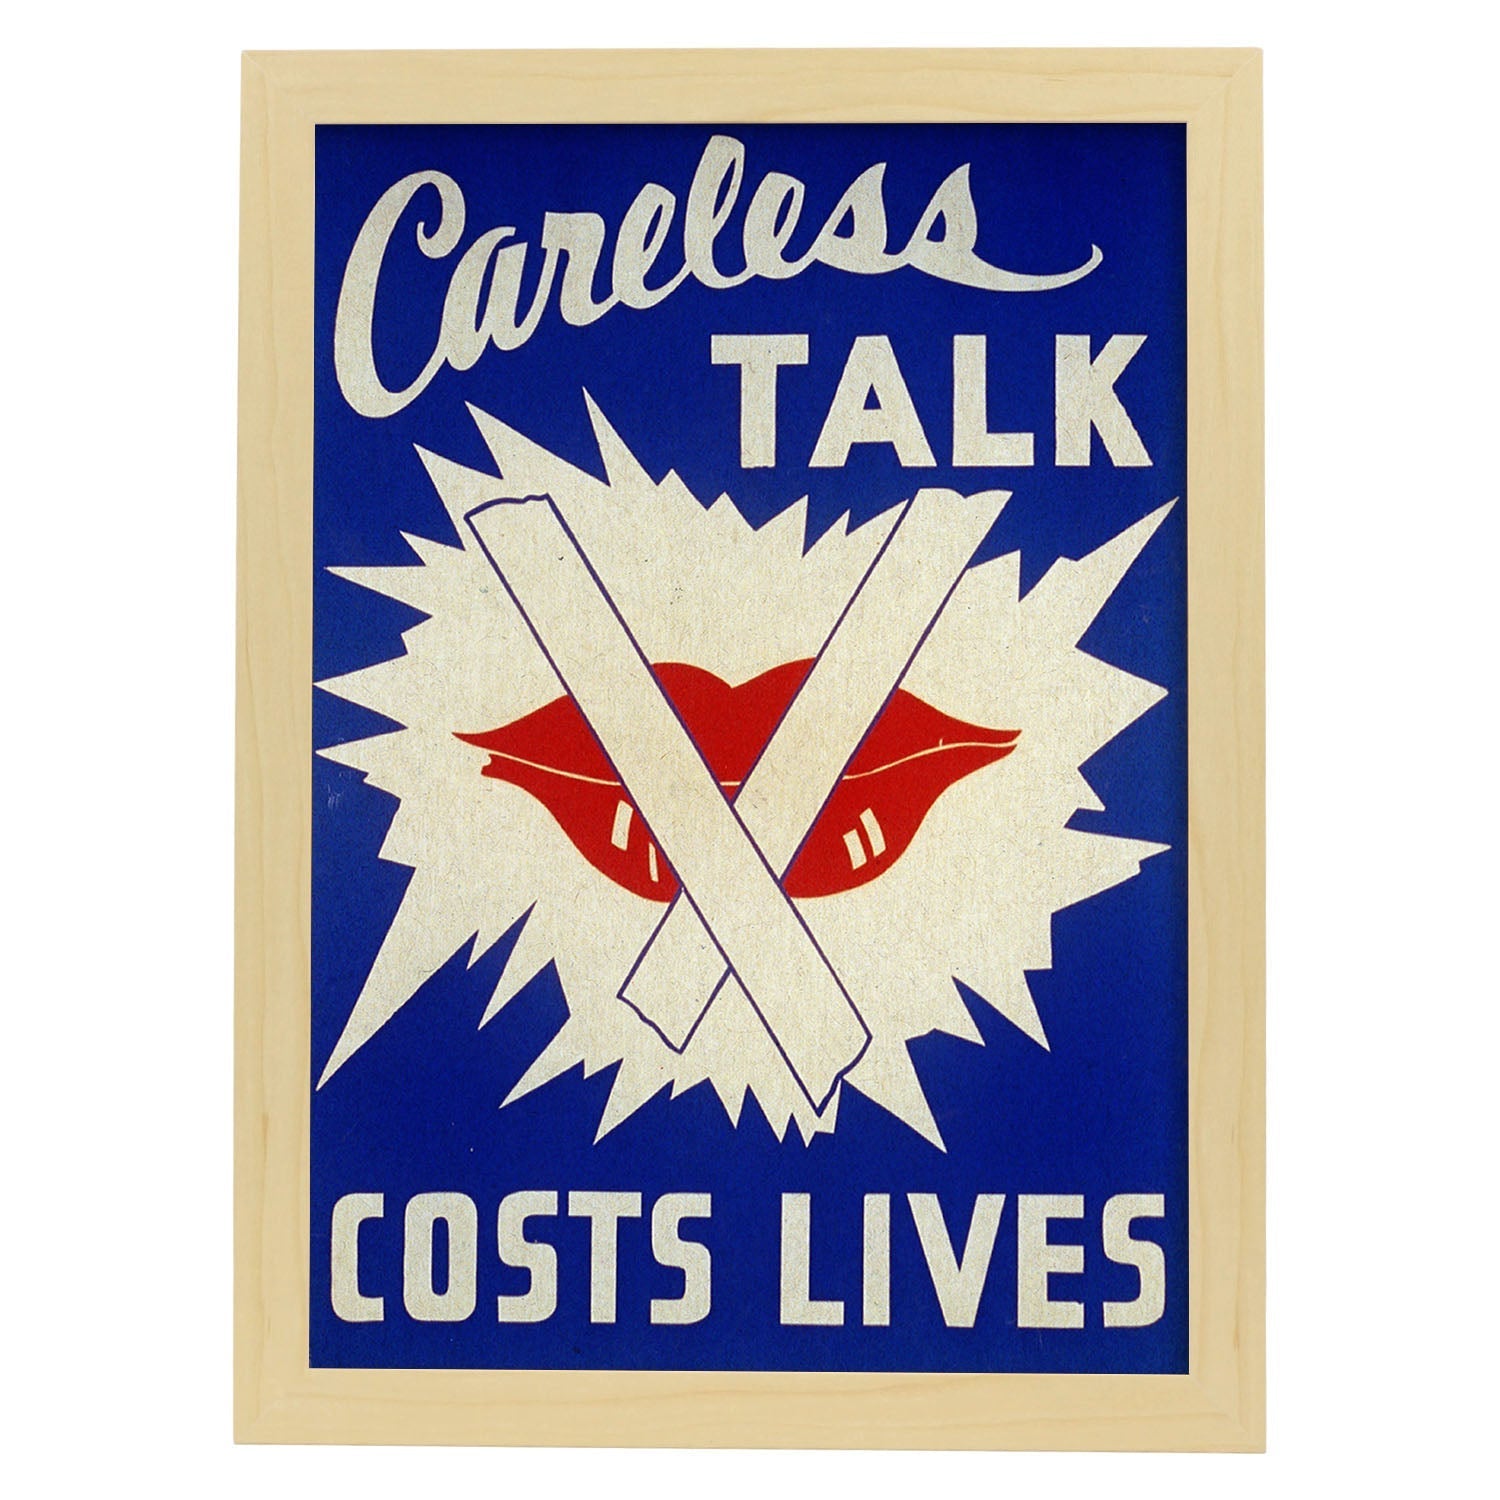 Poster vintage. Cartel vintage Propaganda Segunda Guerra Mundial EEUU "Careless talk".-Artwork-Nacnic-A4-Marco Madera clara-Nacnic Estudio SL